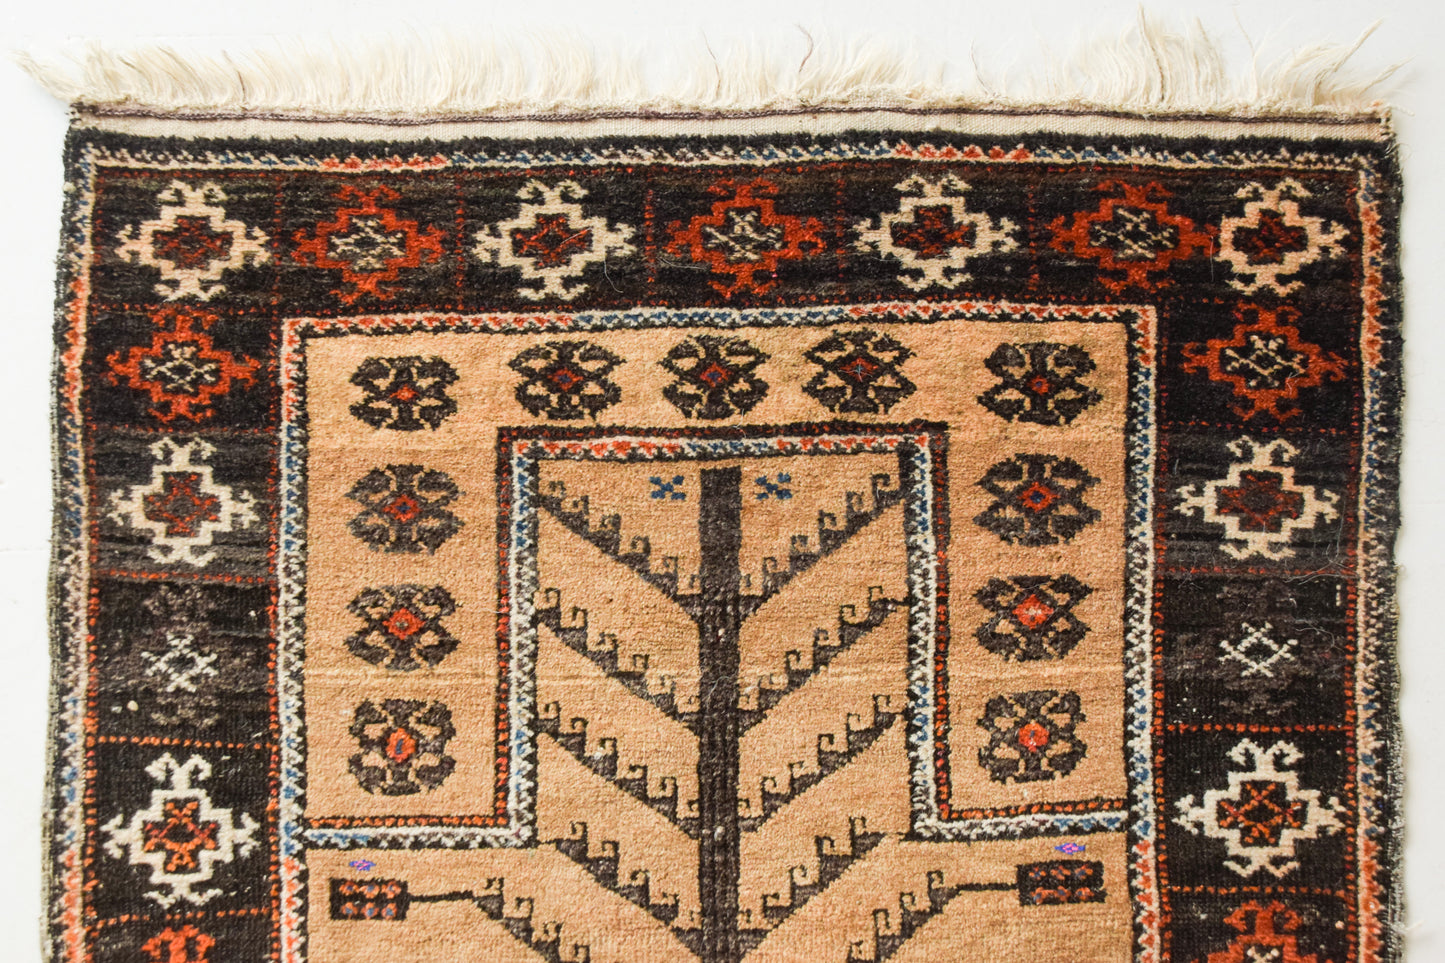 Interesante alfombra afgana tejida a mano